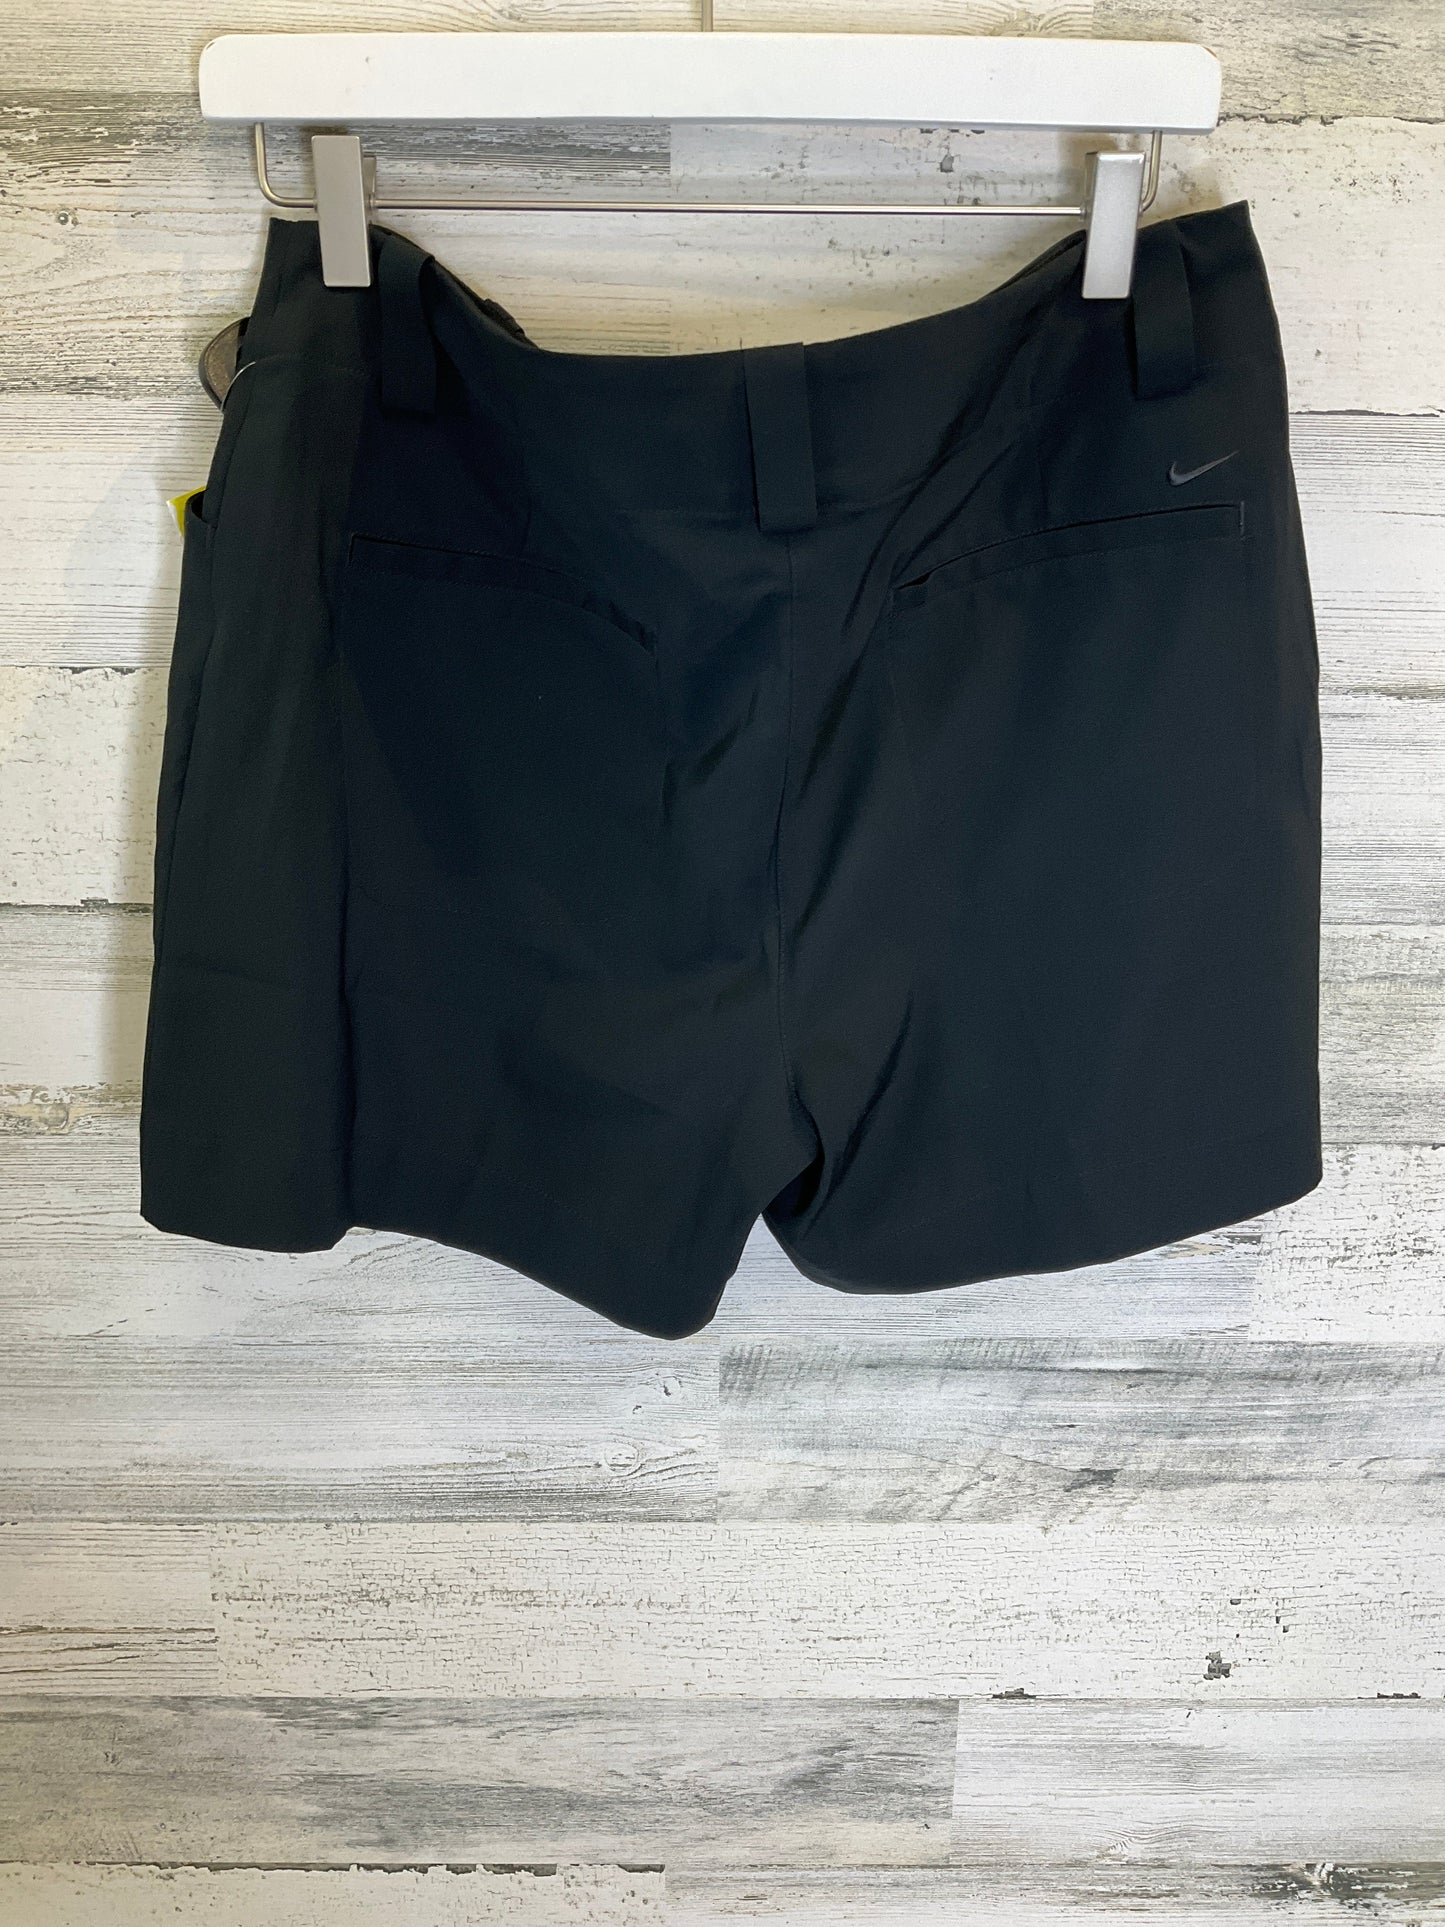 Black Athletic Shorts Nike Apparel, Size 10